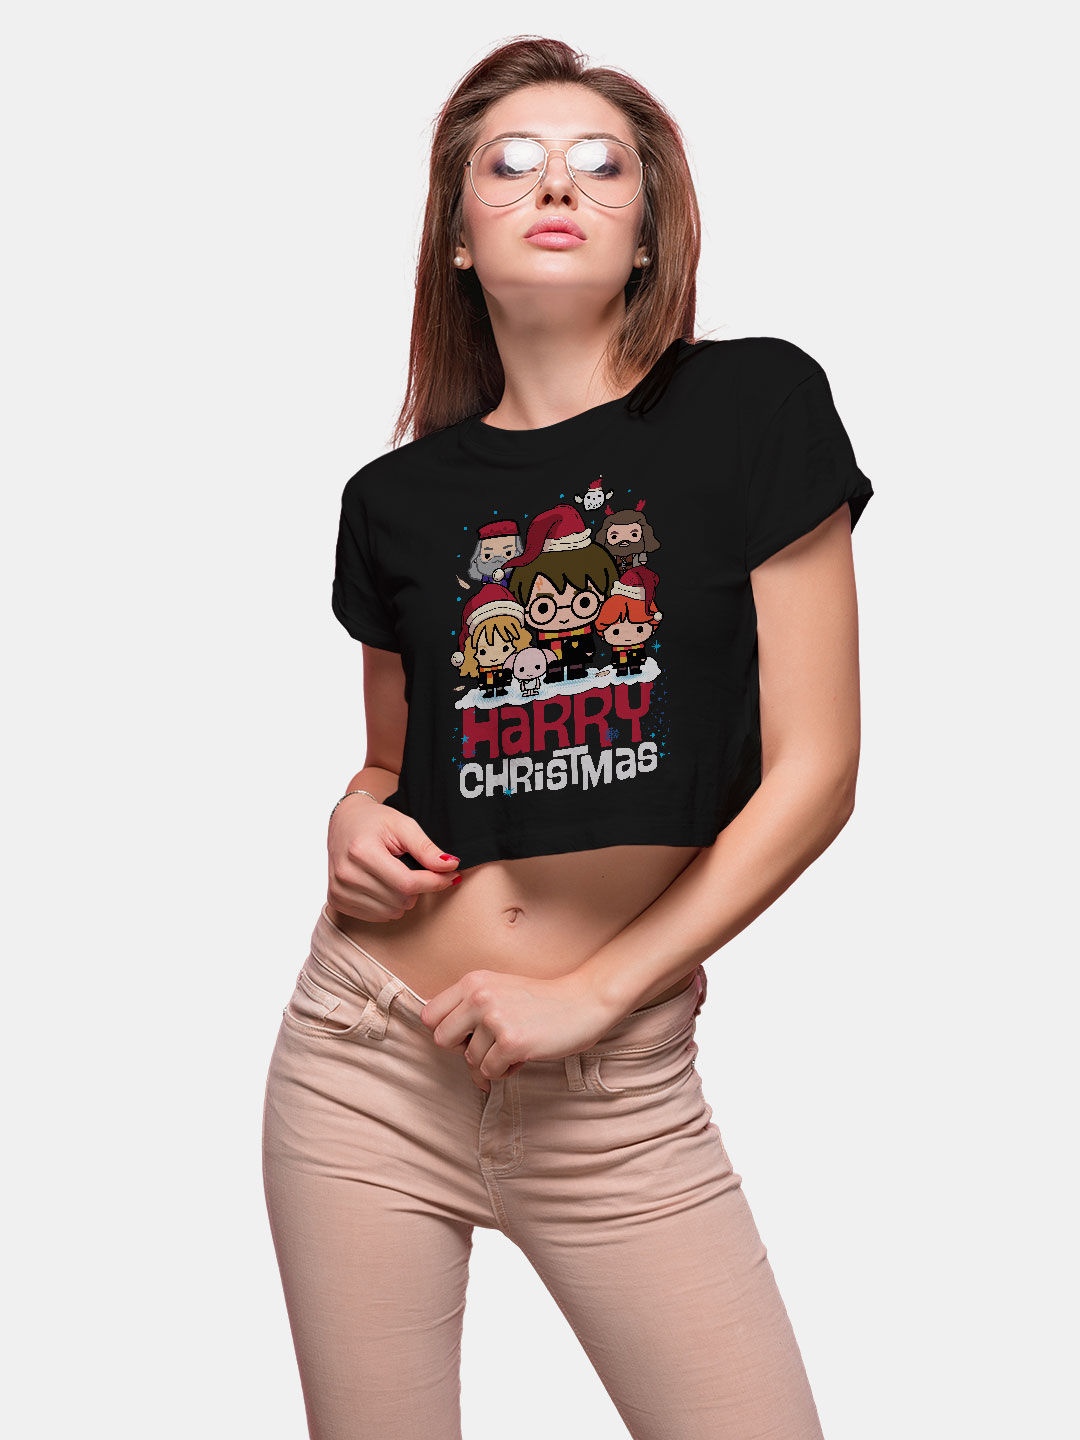 Buy Harry Christmas Black - Designer Crop Tops T-Shirts Online